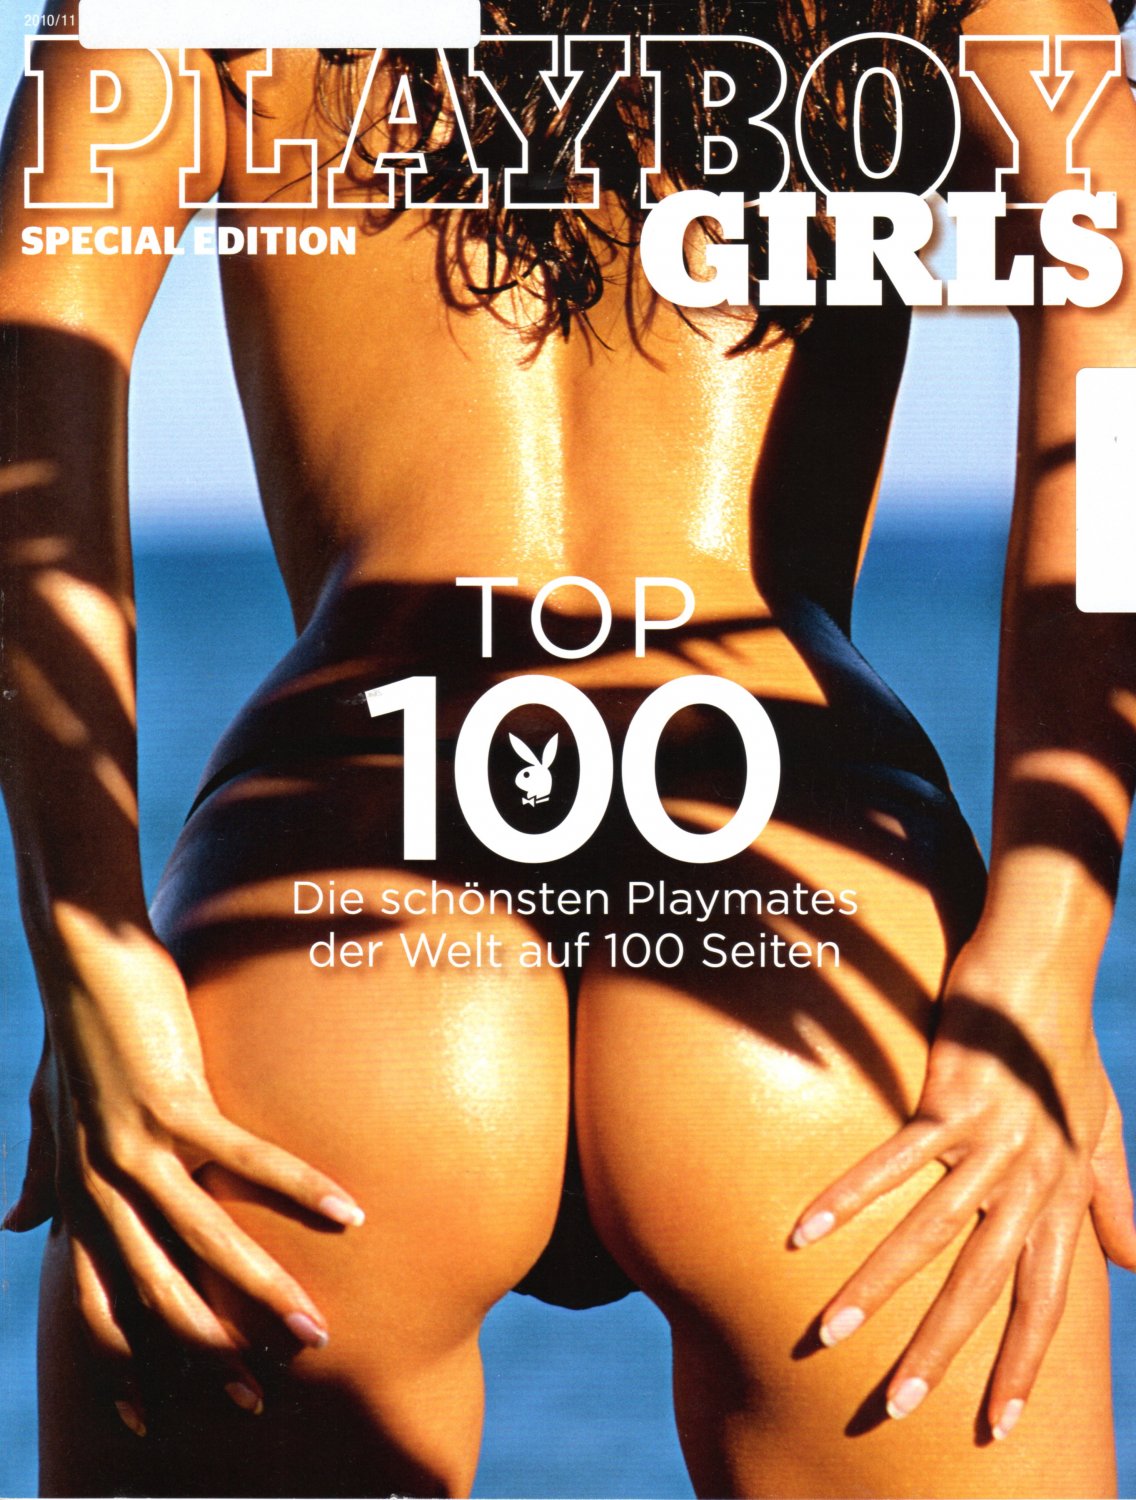 Over hoved og skulder stor Tale Playboy Girls Special Edition 2010/11 Top 100“ – Buch gebraucht kaufen –  A02jLrzx01ZZK